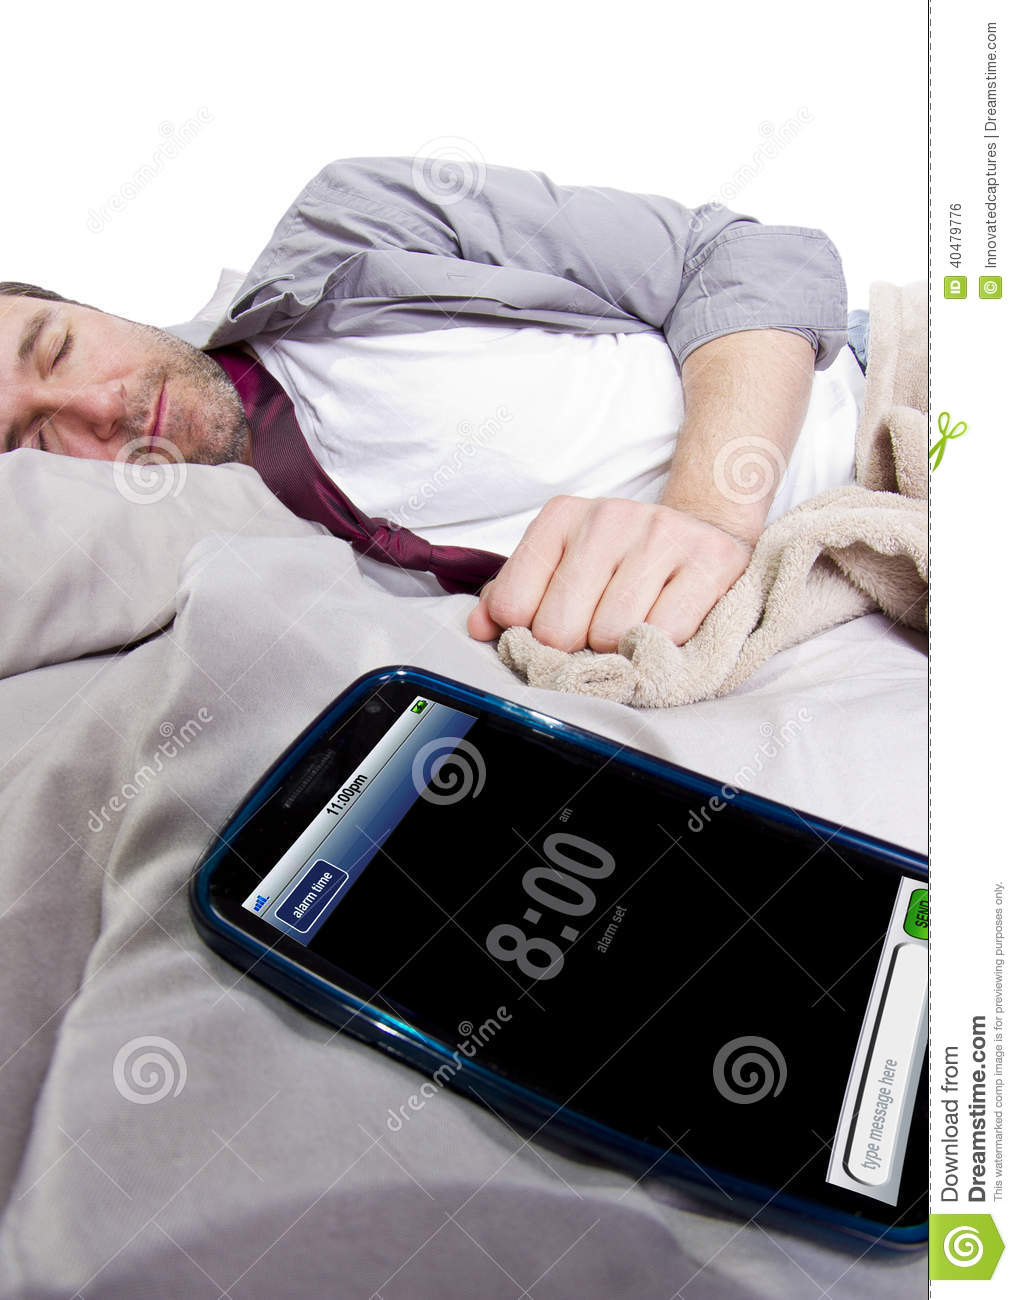 Android phone alarm clock